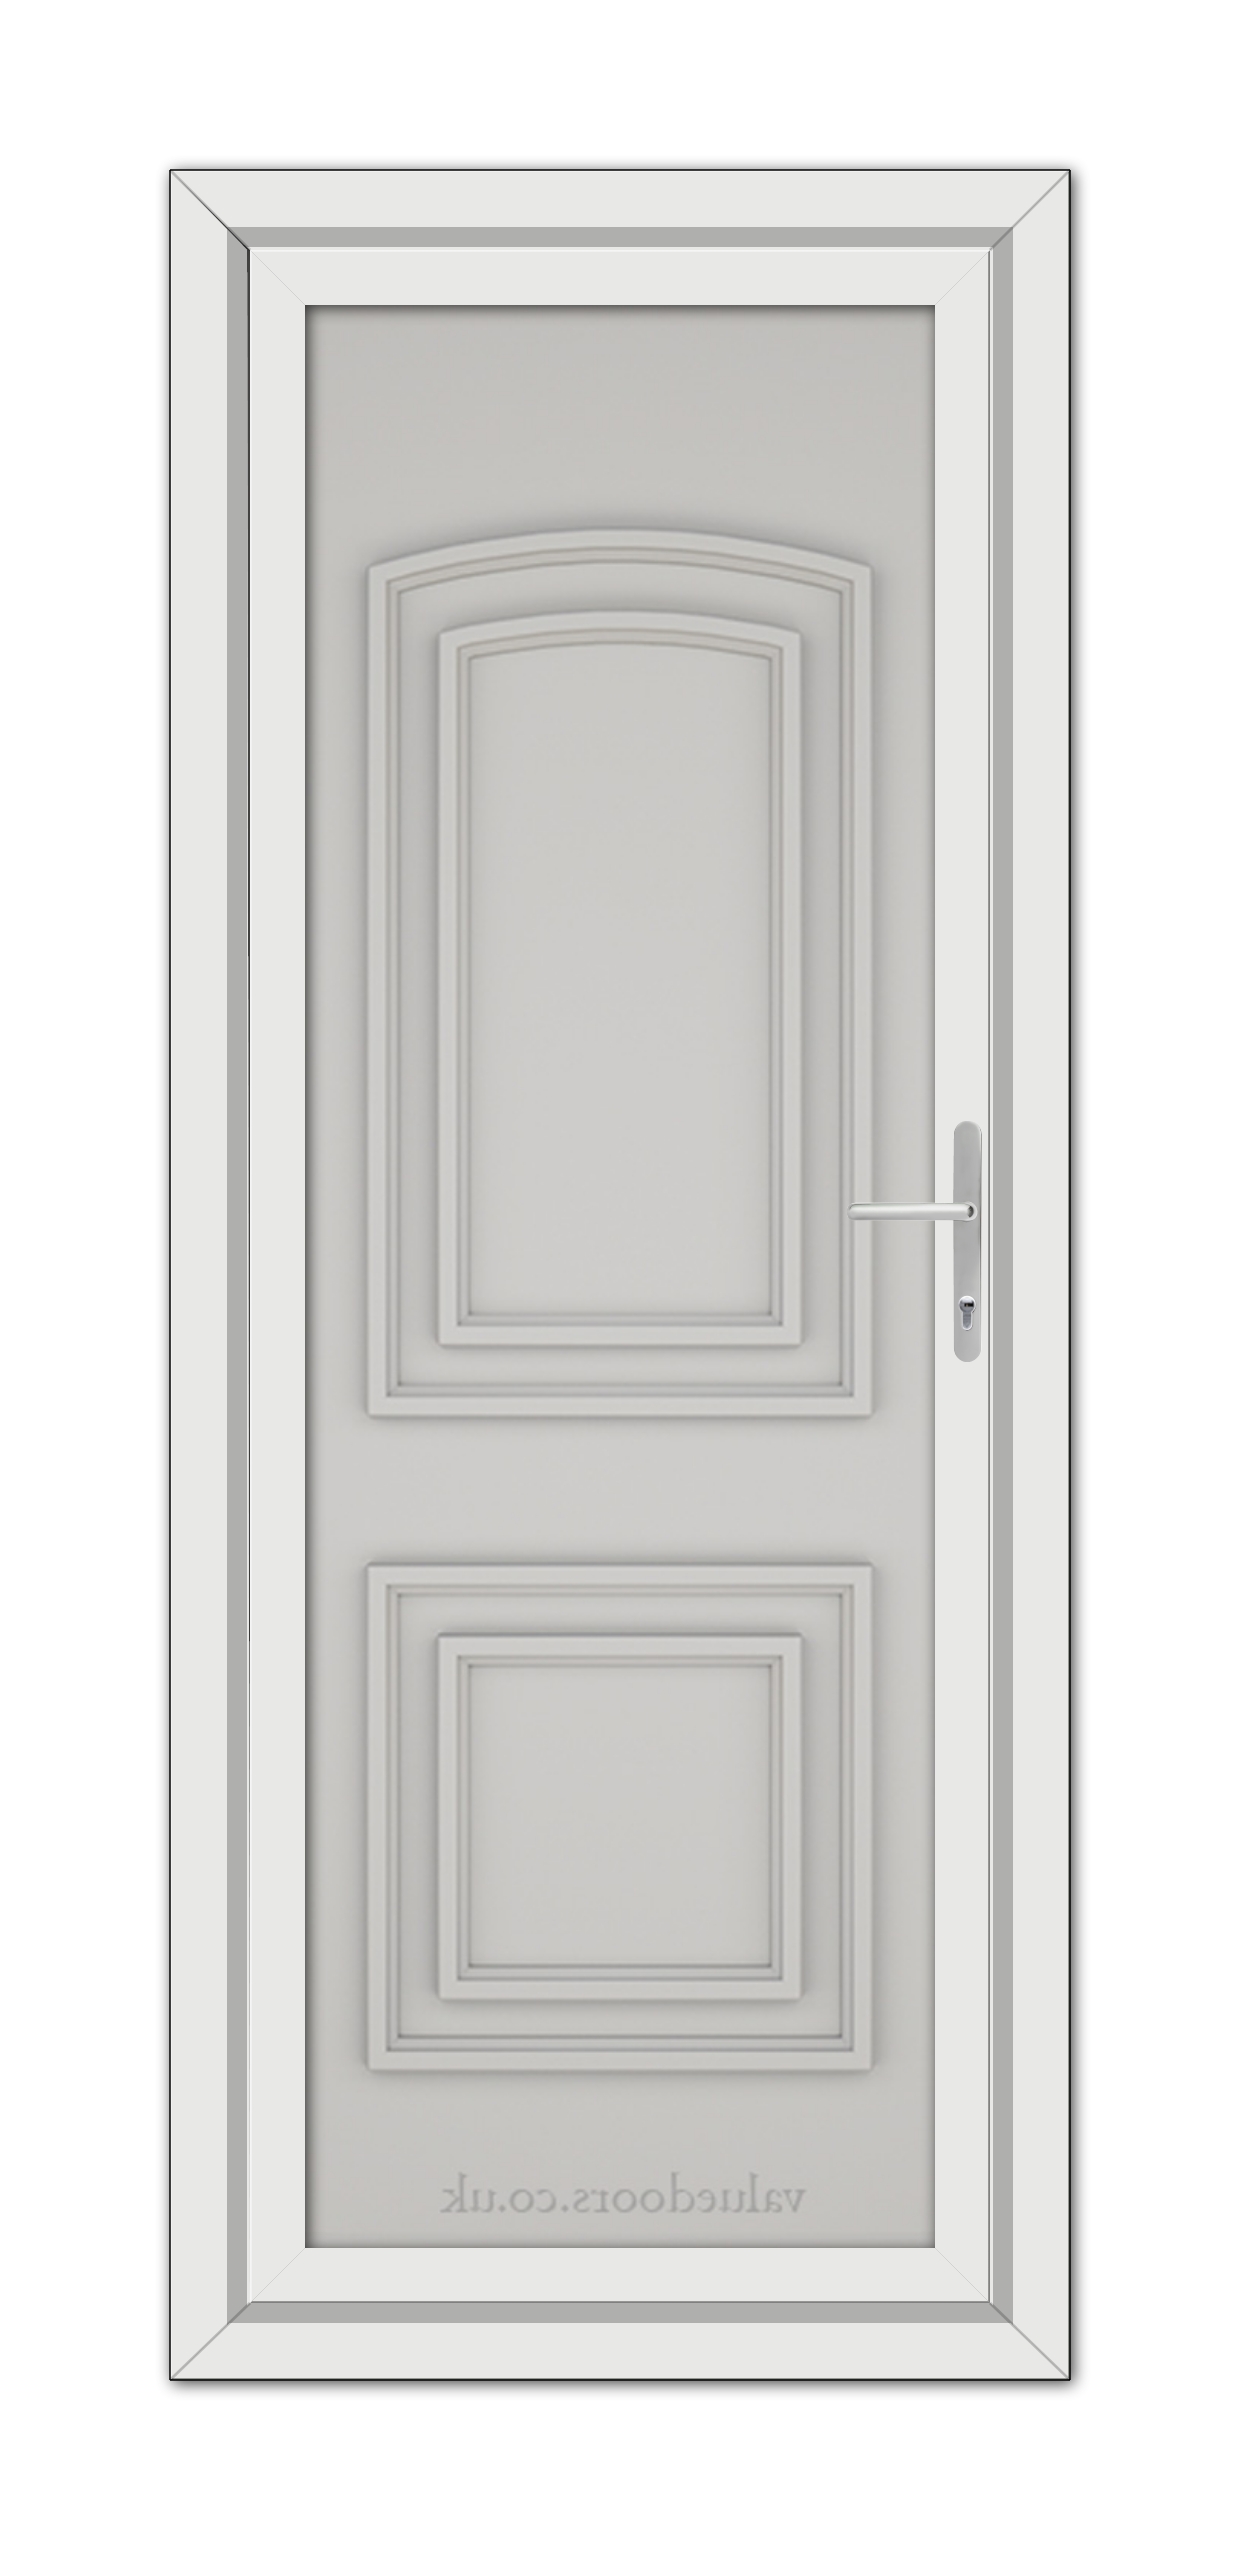 A Silver Grey Balmoral Solid uPVC door with a silver handle.